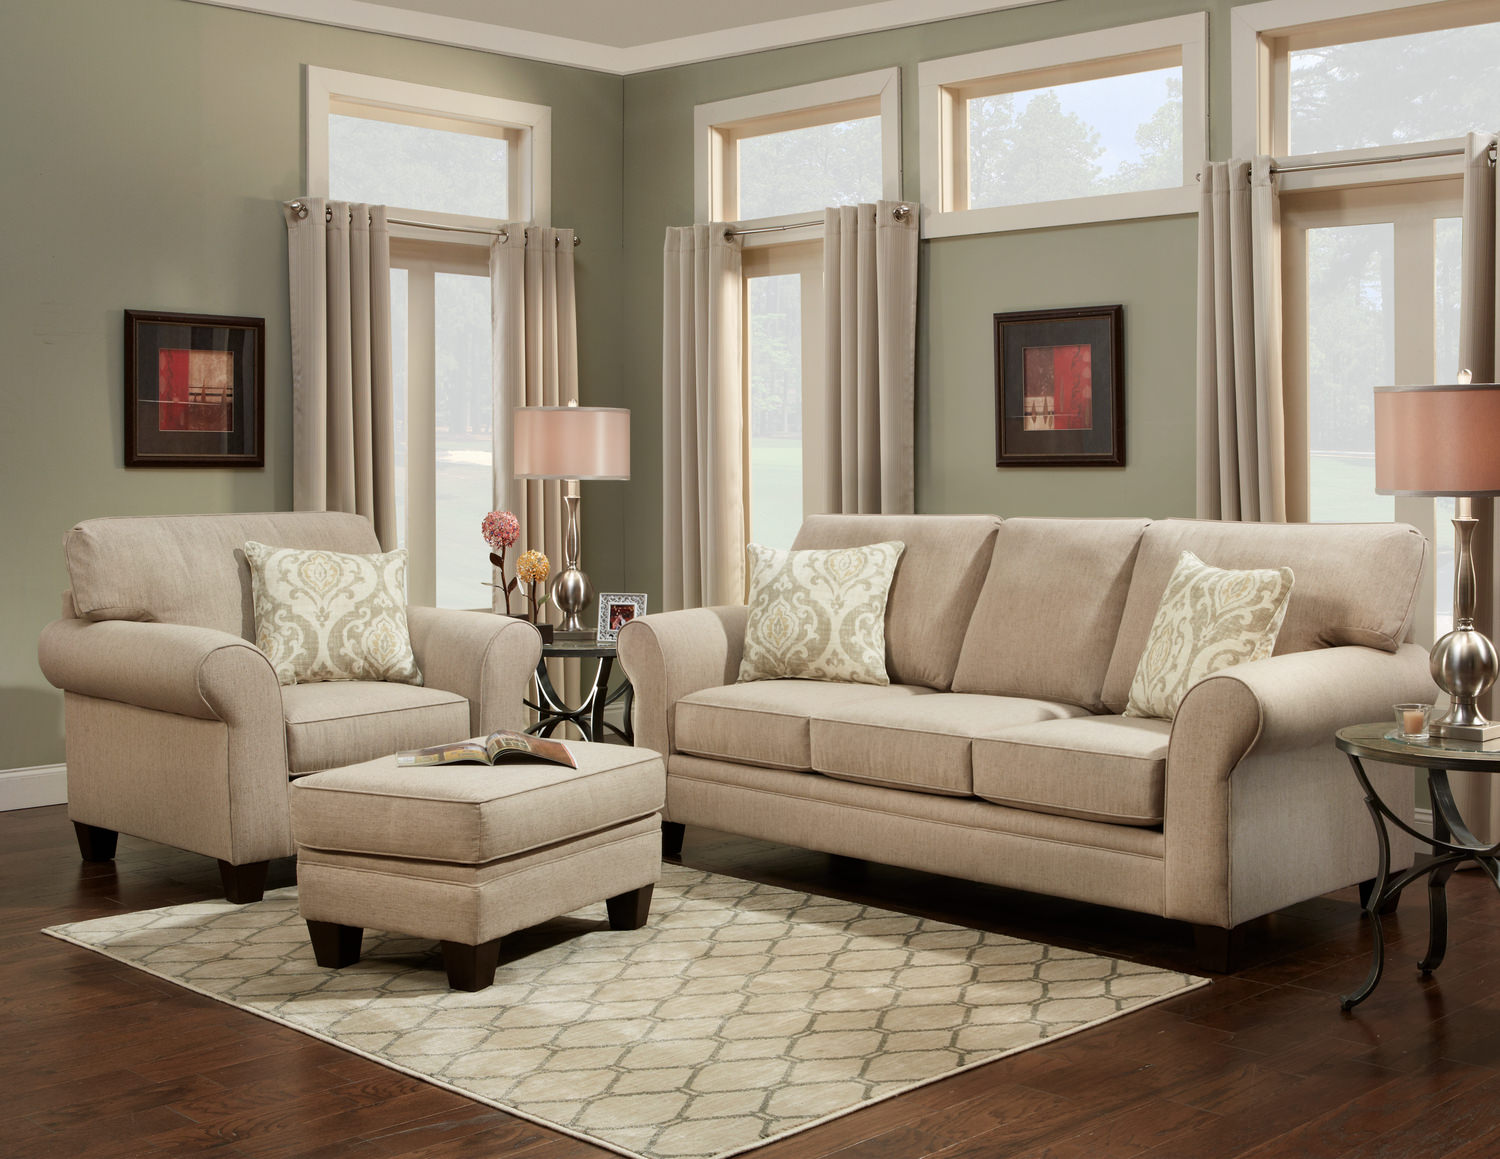 Beautiful Hom Furniture Living Room Sets 2020 2020 Modern Living Room Uk